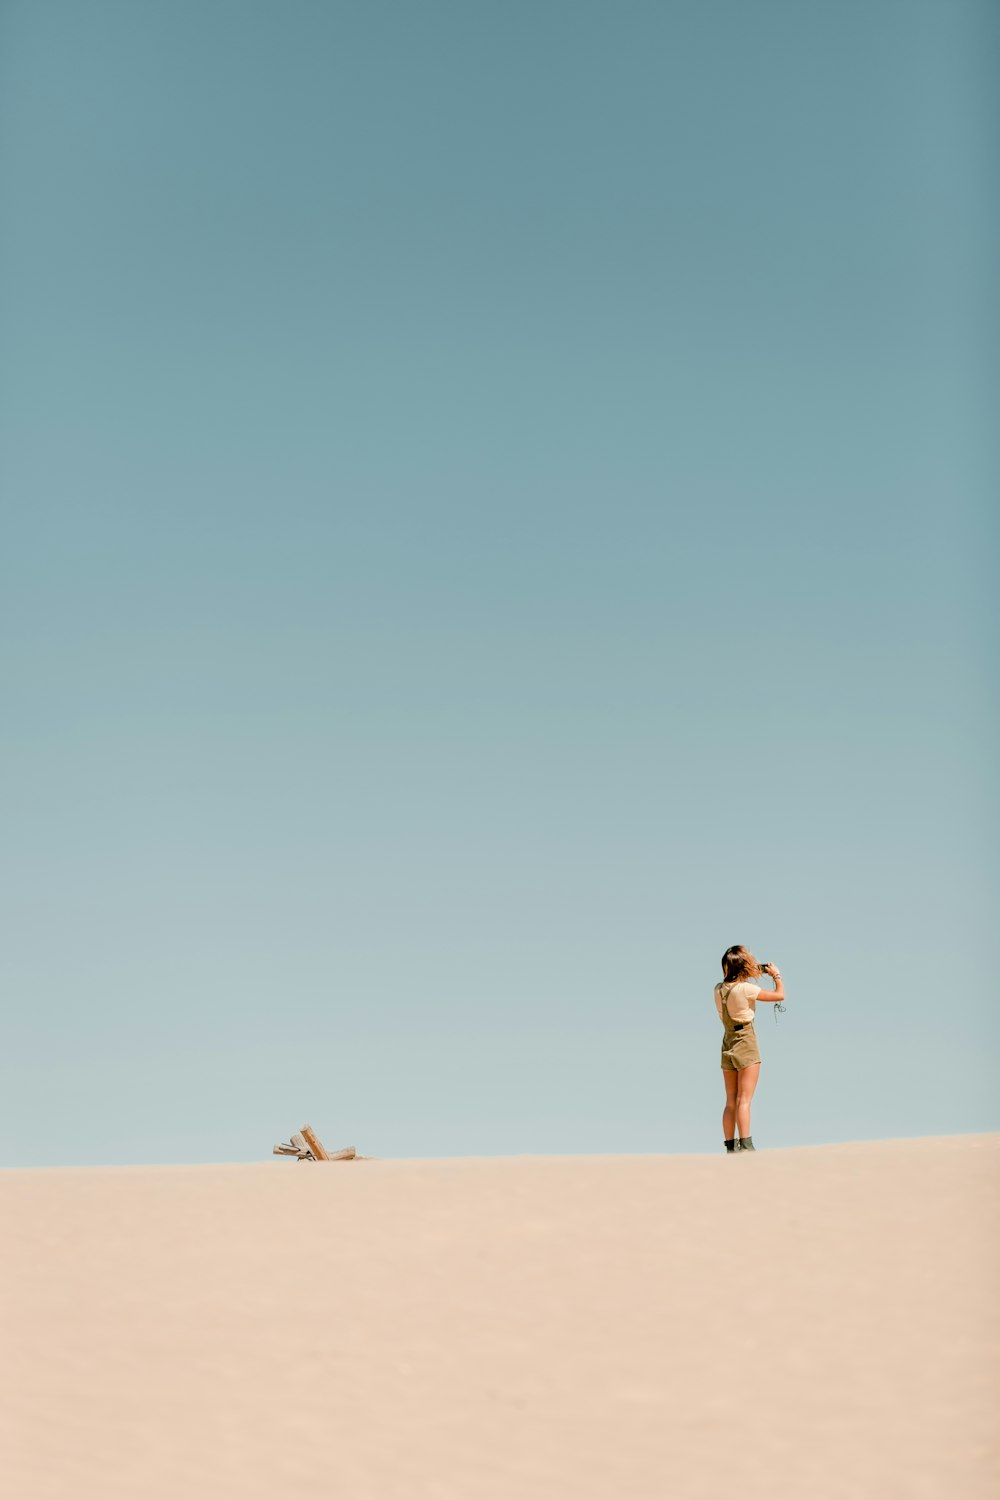 person wearing white t-shirt standing on desert during daytime